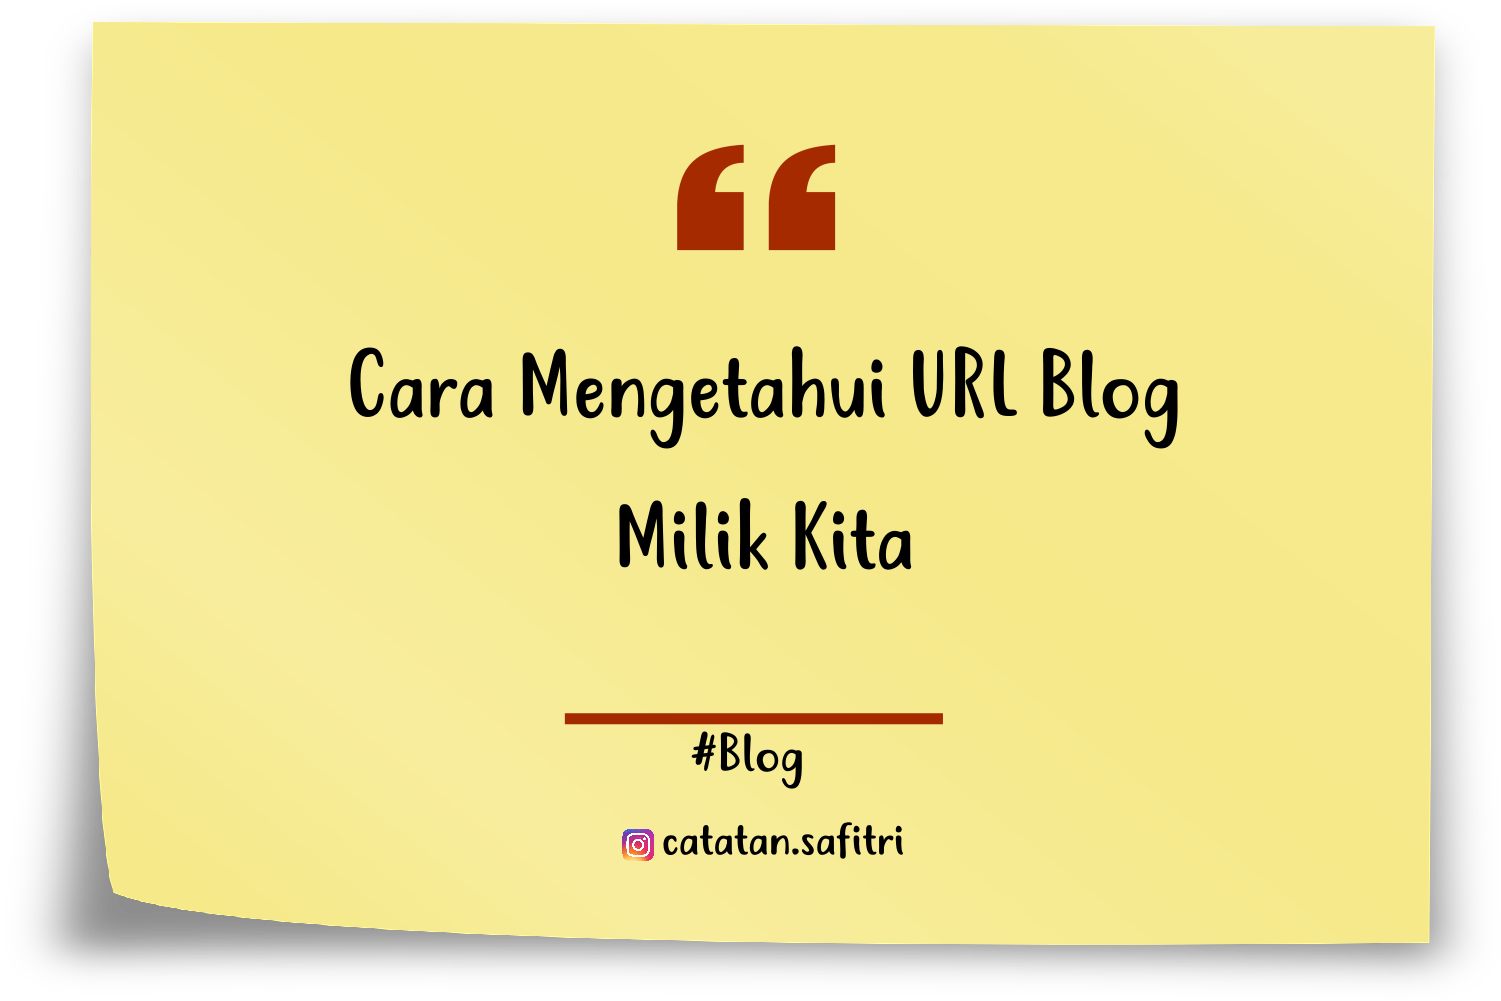 Url blog